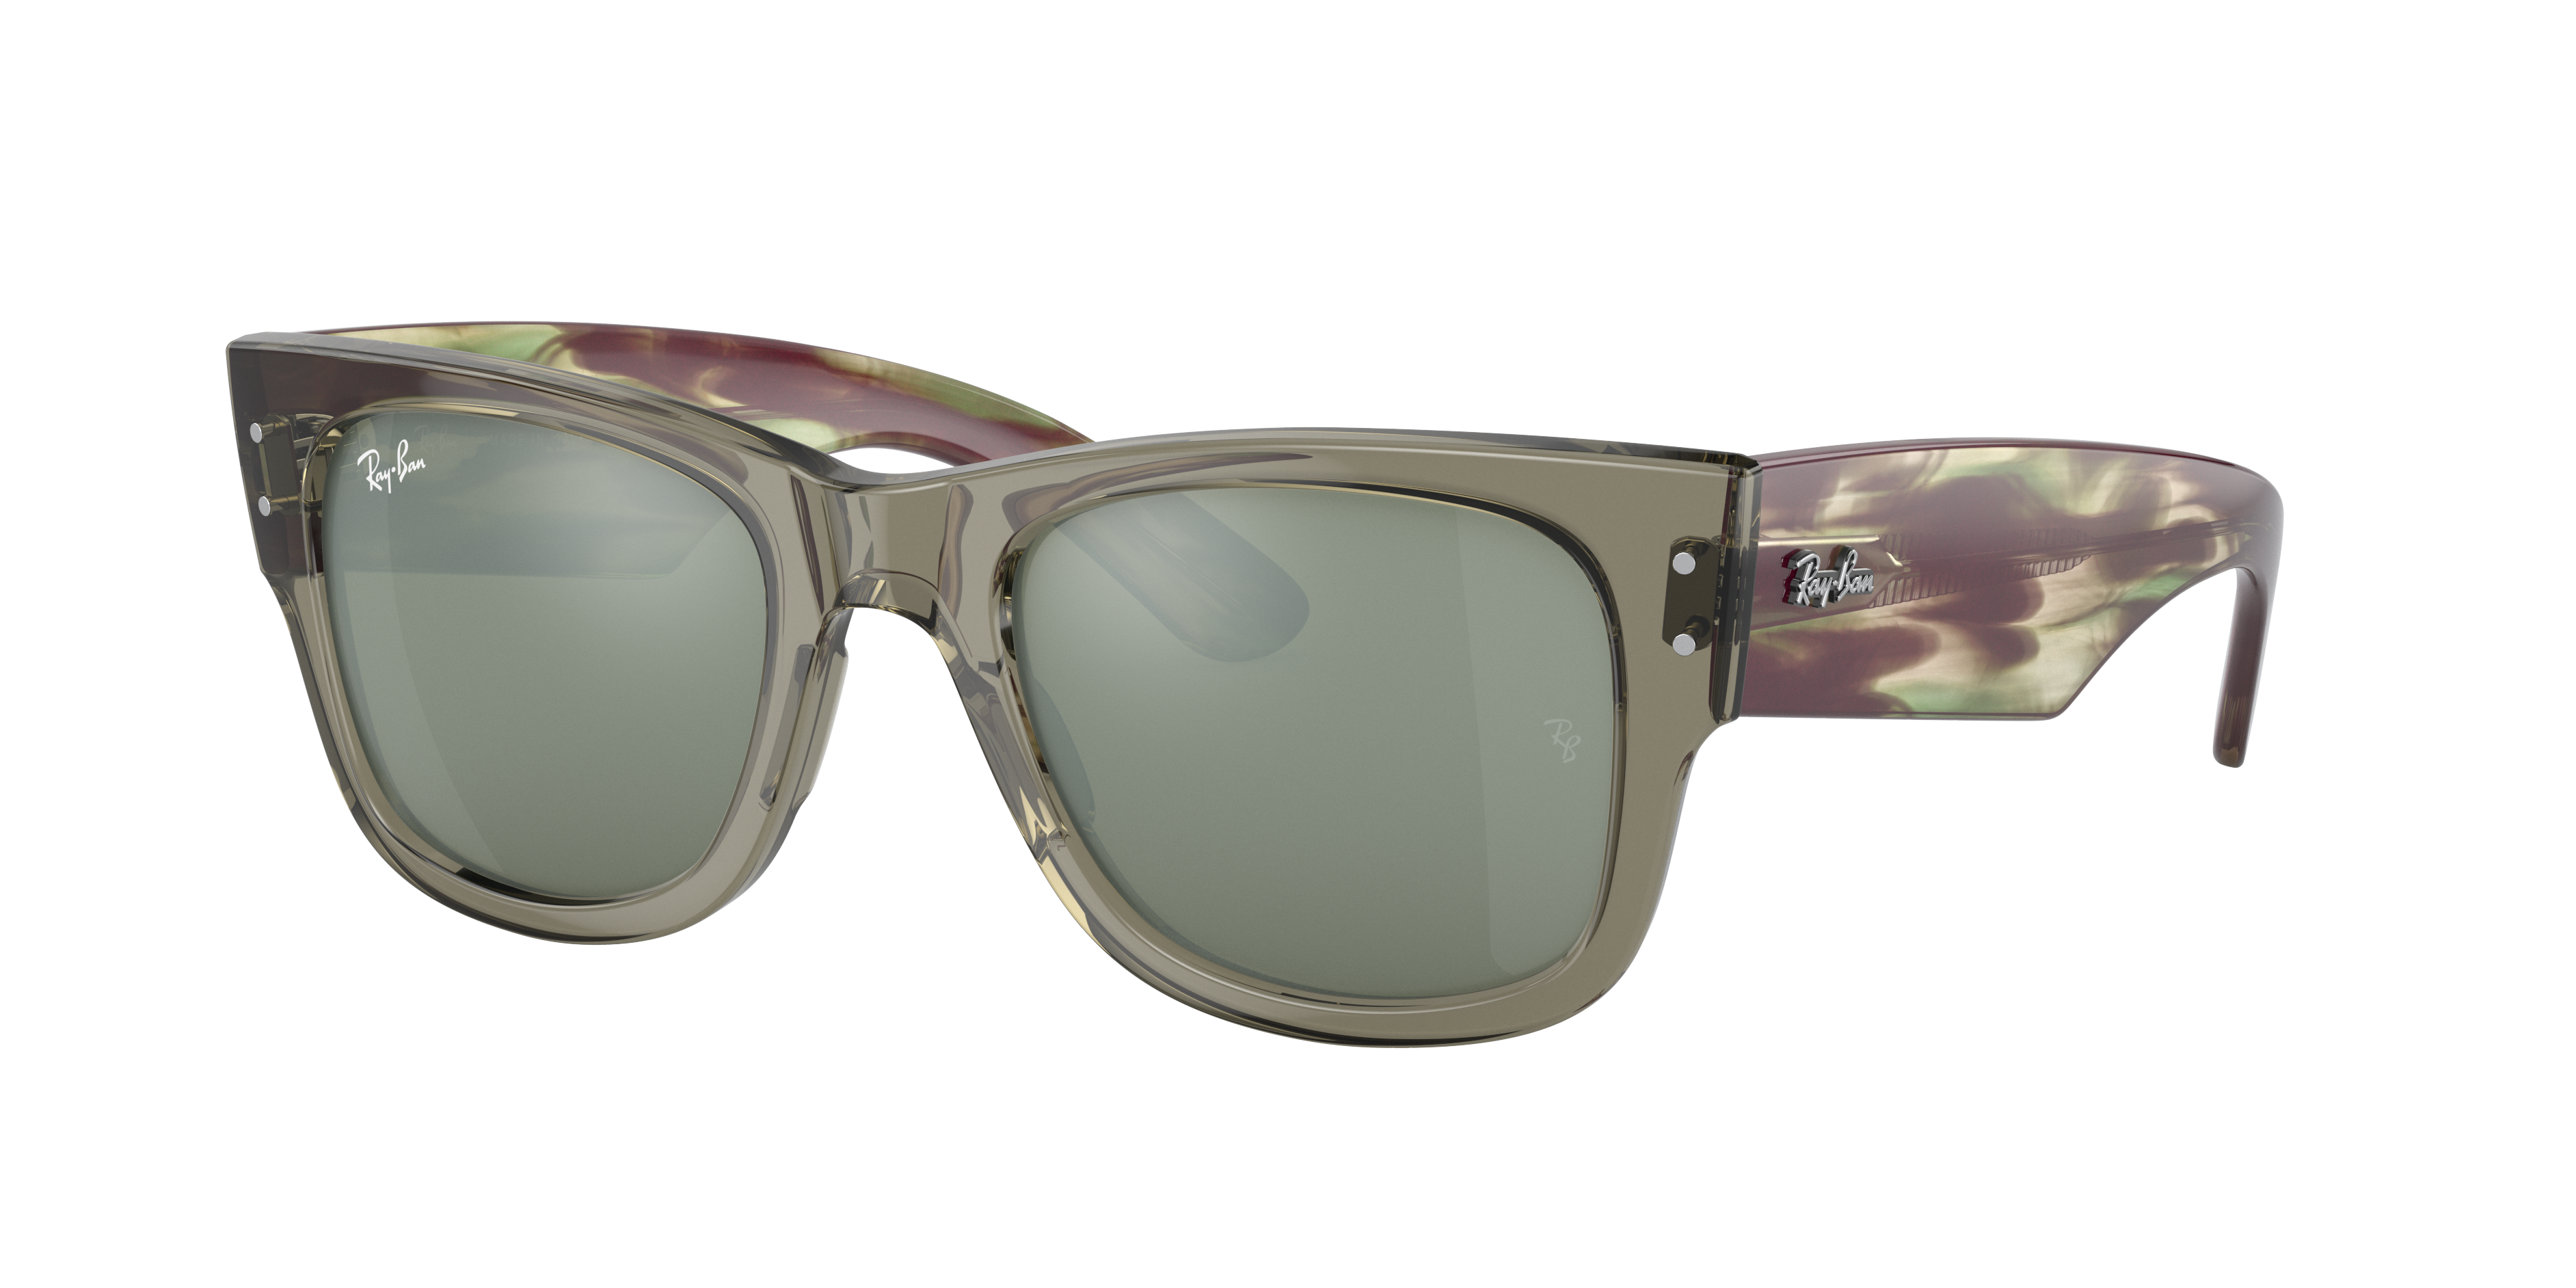 Mega Wayfarer Sunglasses in Transparent Green and Silver | Ray-Ban®